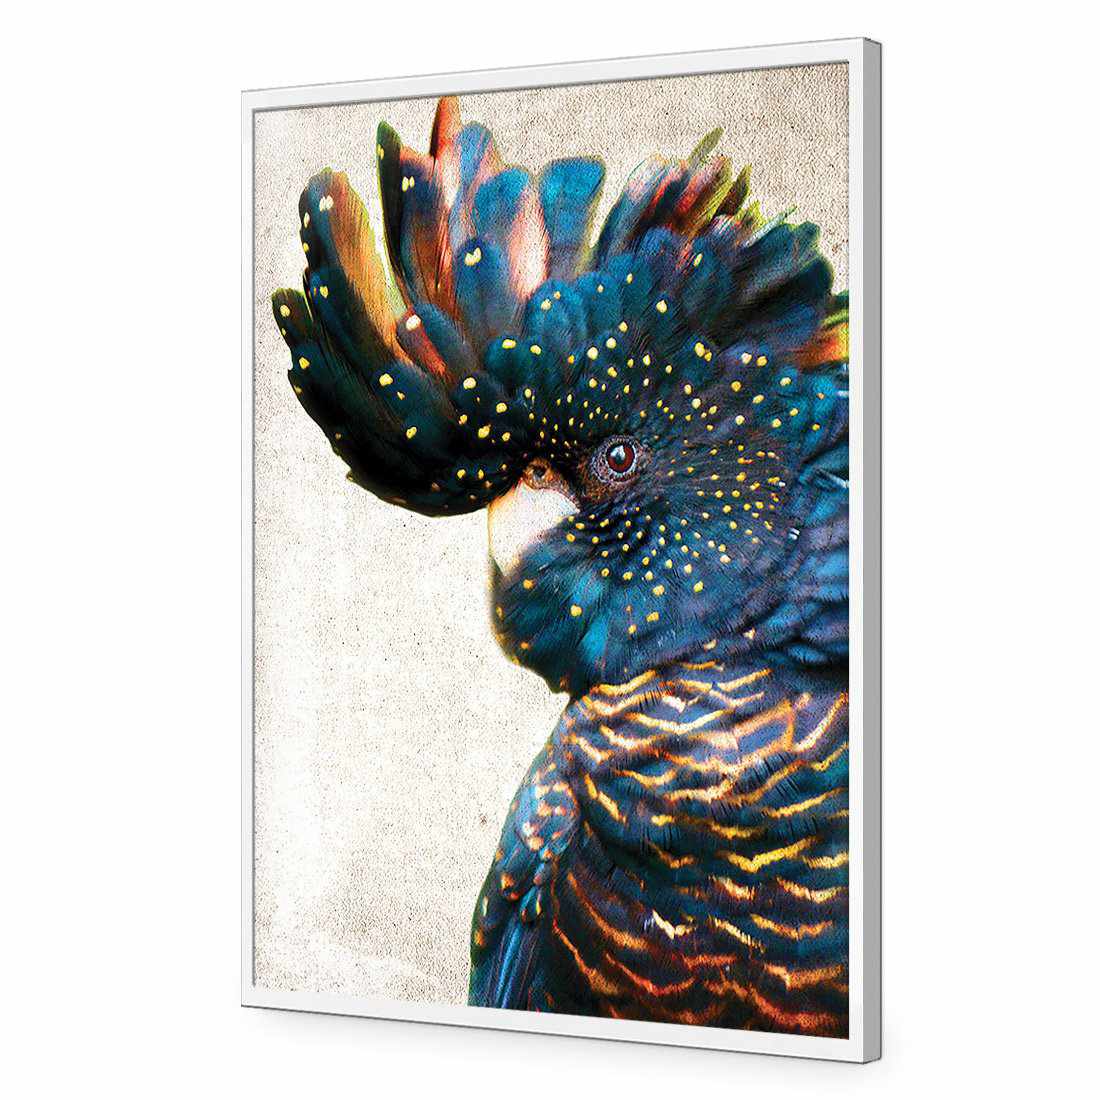 Black Cockatoo Side, Grunge Acrylic Glass Art-Acrylic-Wall Art Designs-Without Border-Acrylic - White Frame-45x30cm-Wall Art Designs